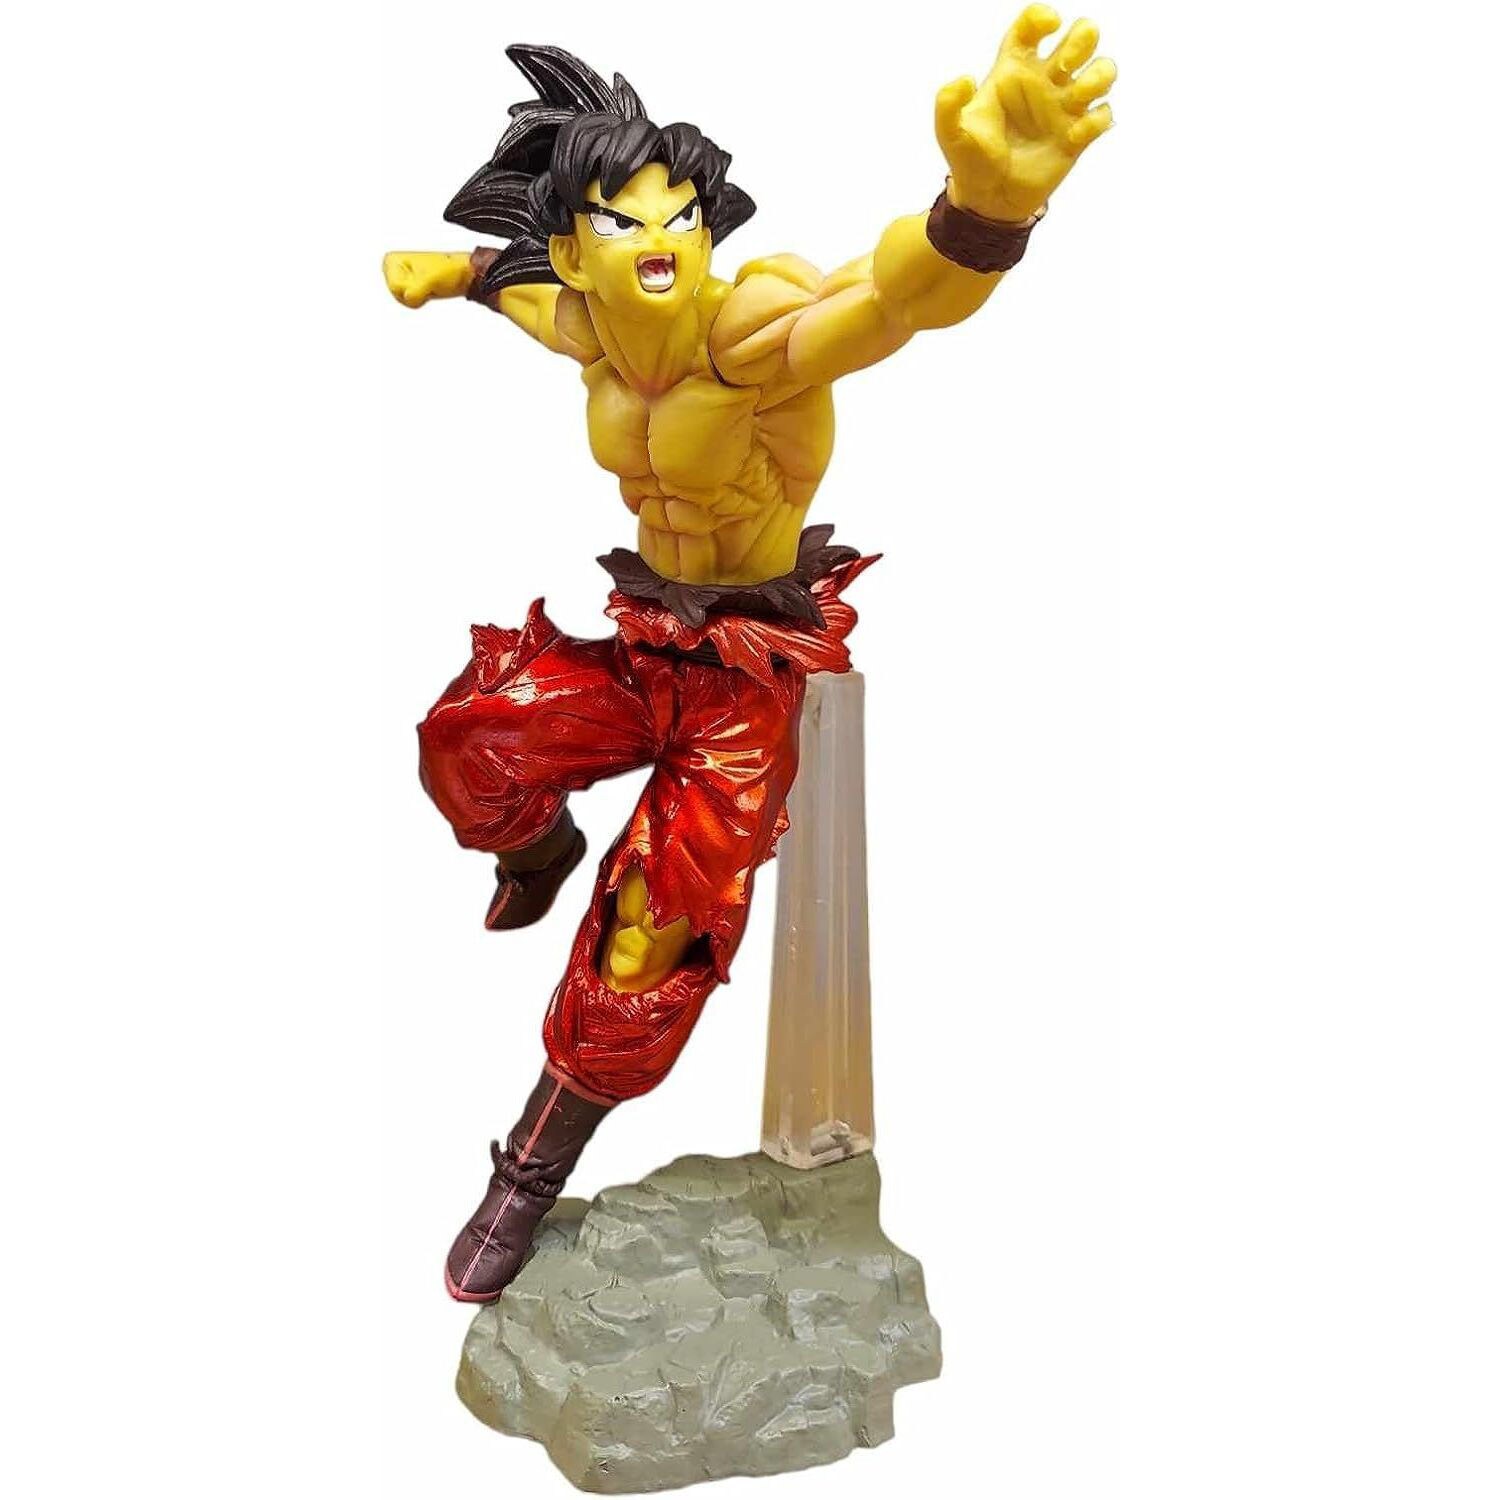 Buy Custom Anime Figure Handmade Sculpture Online in India - Etsy